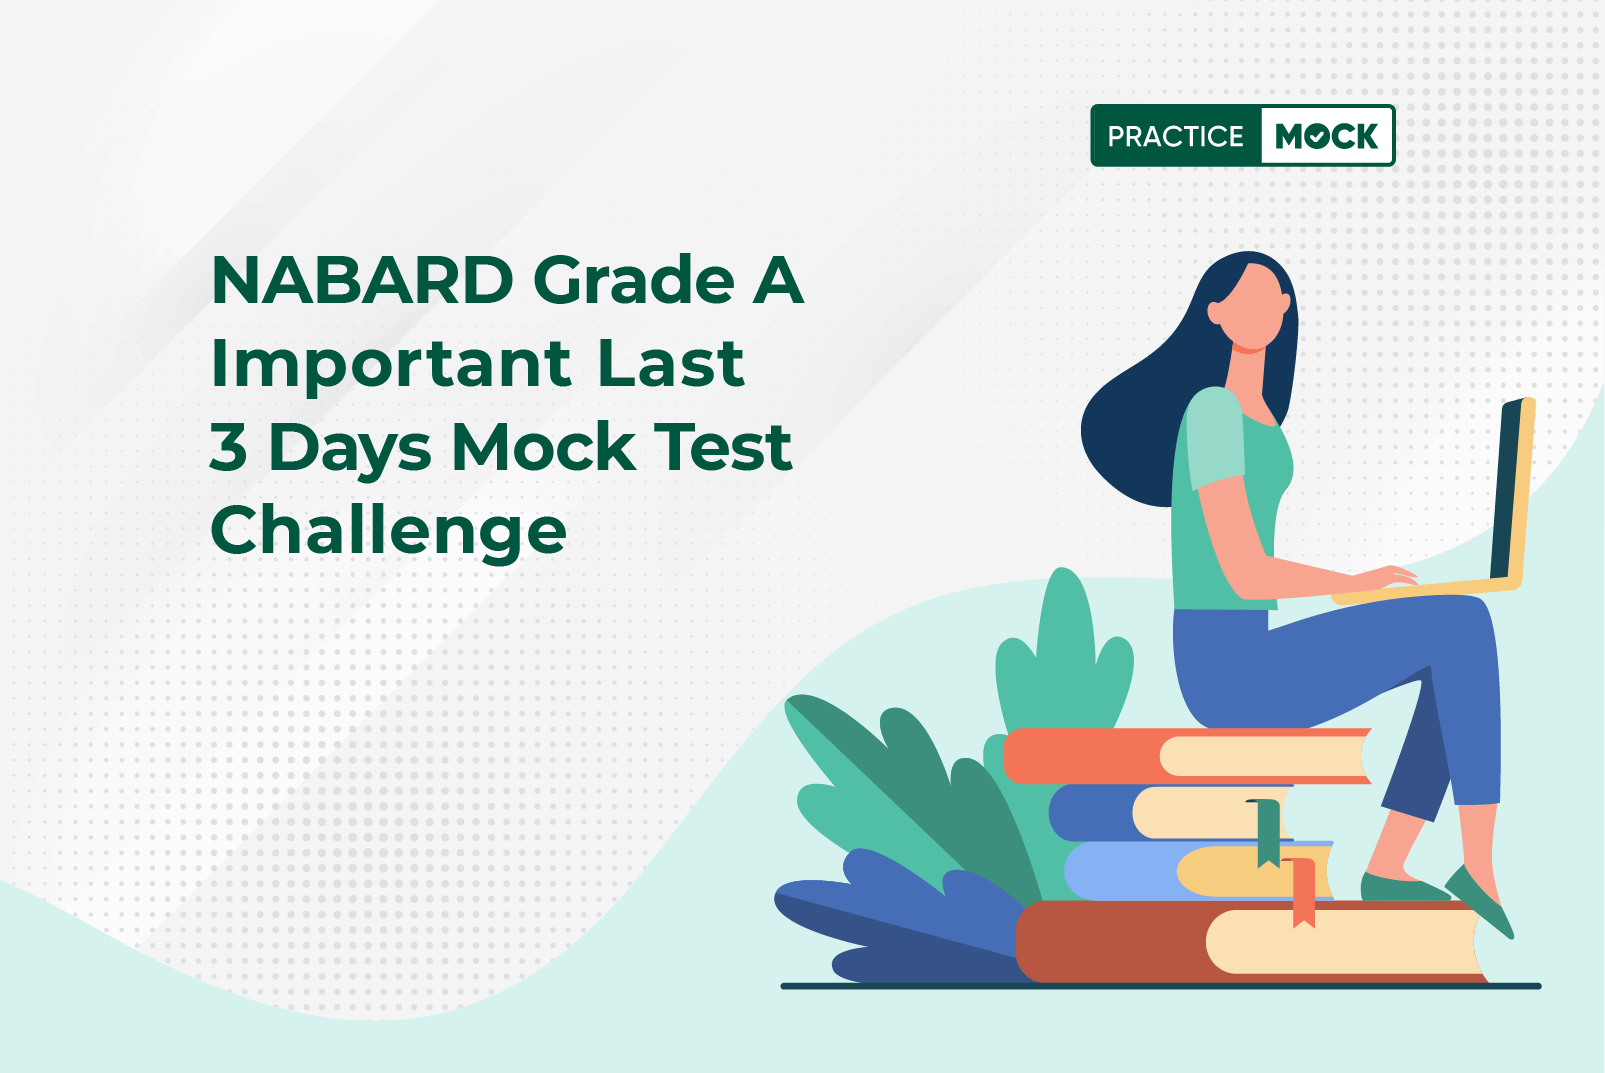 NABARD Grade A Important Last 3 Days Mock Test Challenge